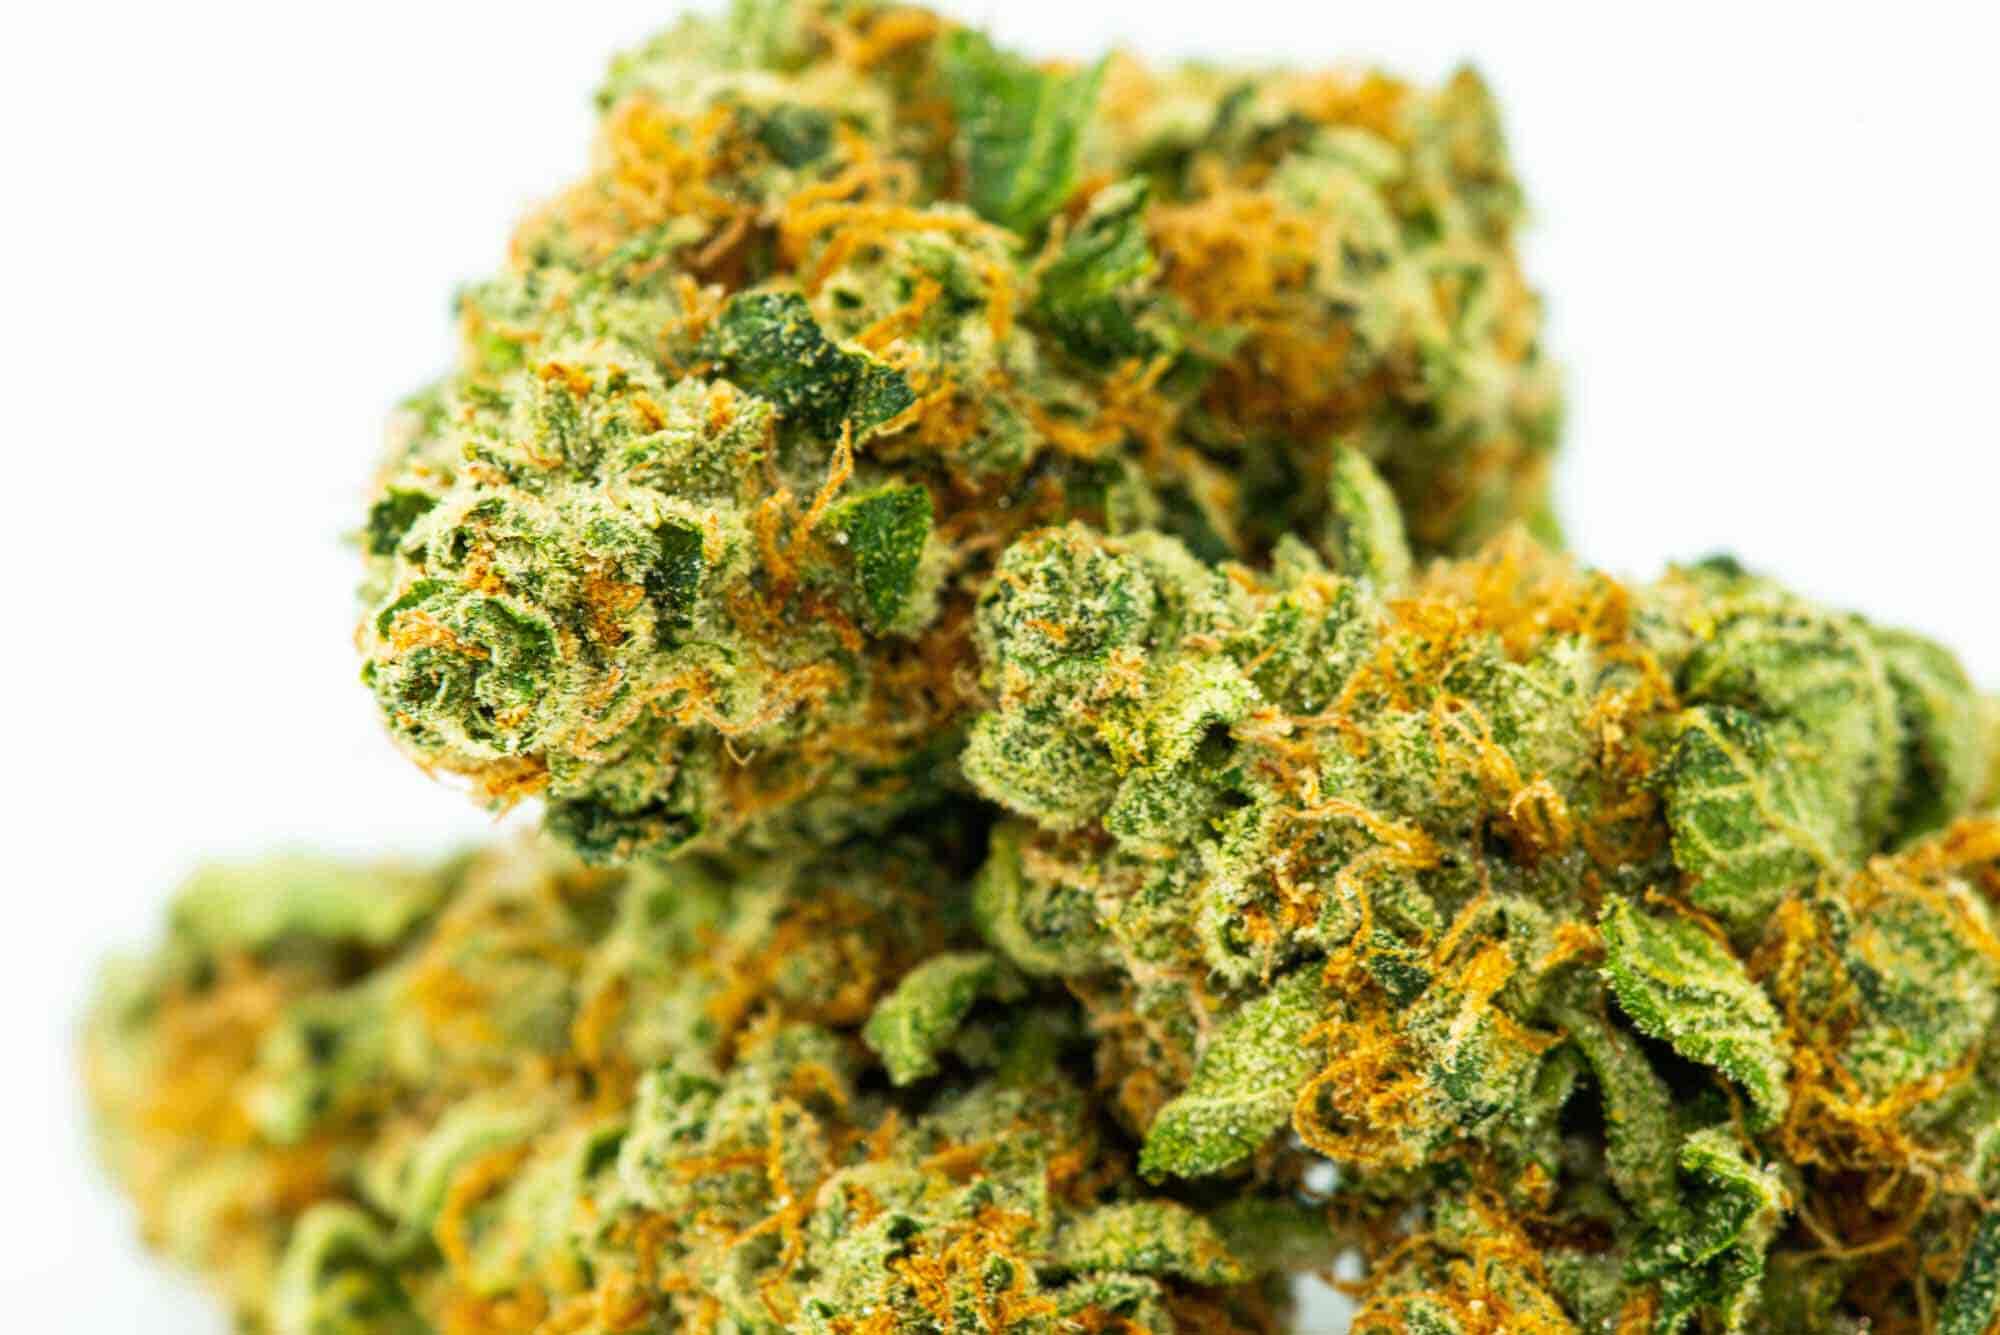 Bright Cannabis Buds